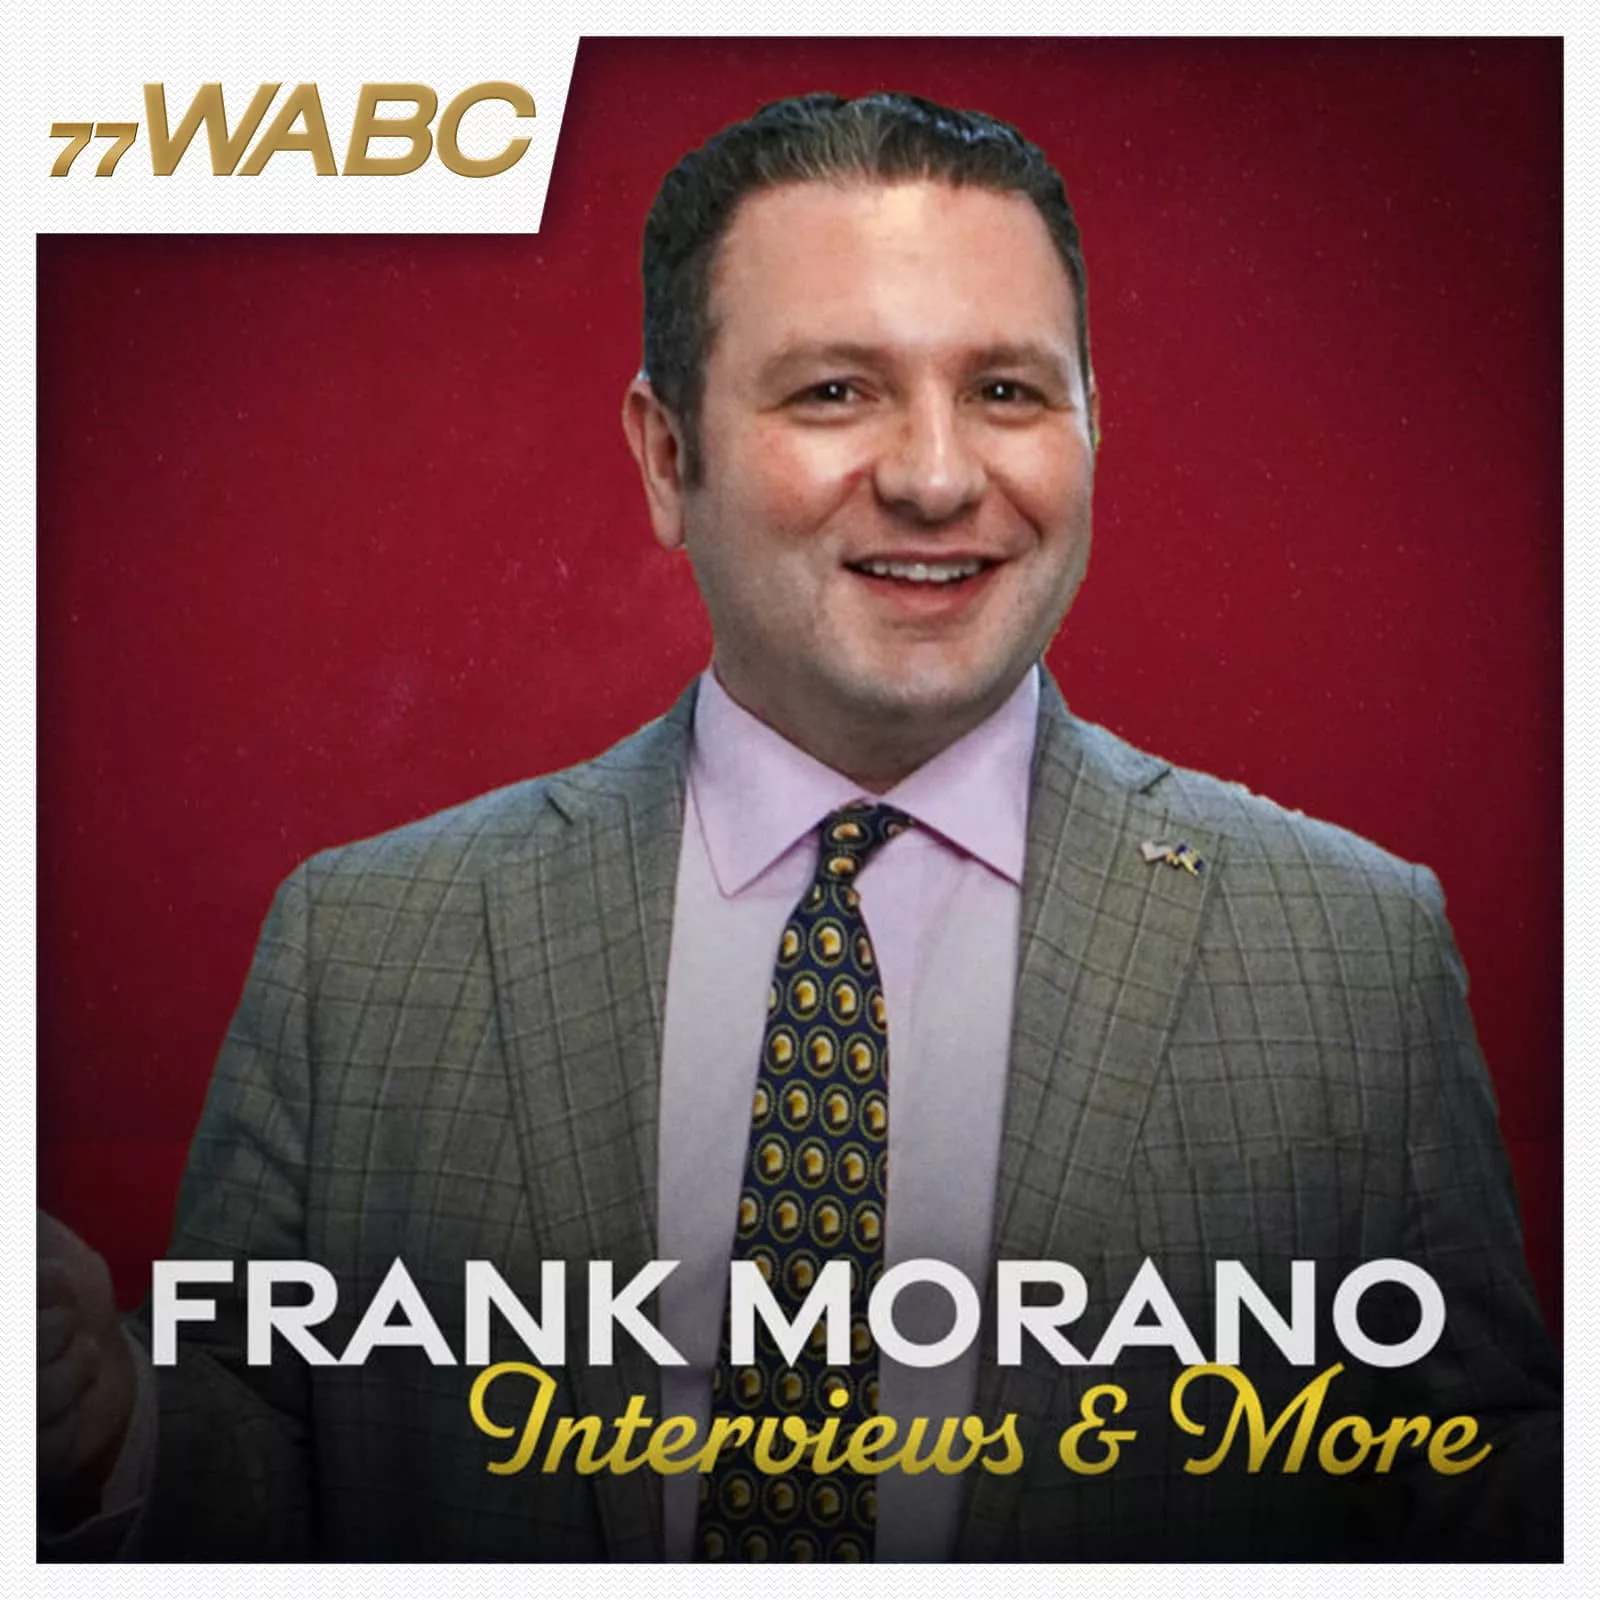 frank-morano-interviews-and-more-podcast-new-logo101625